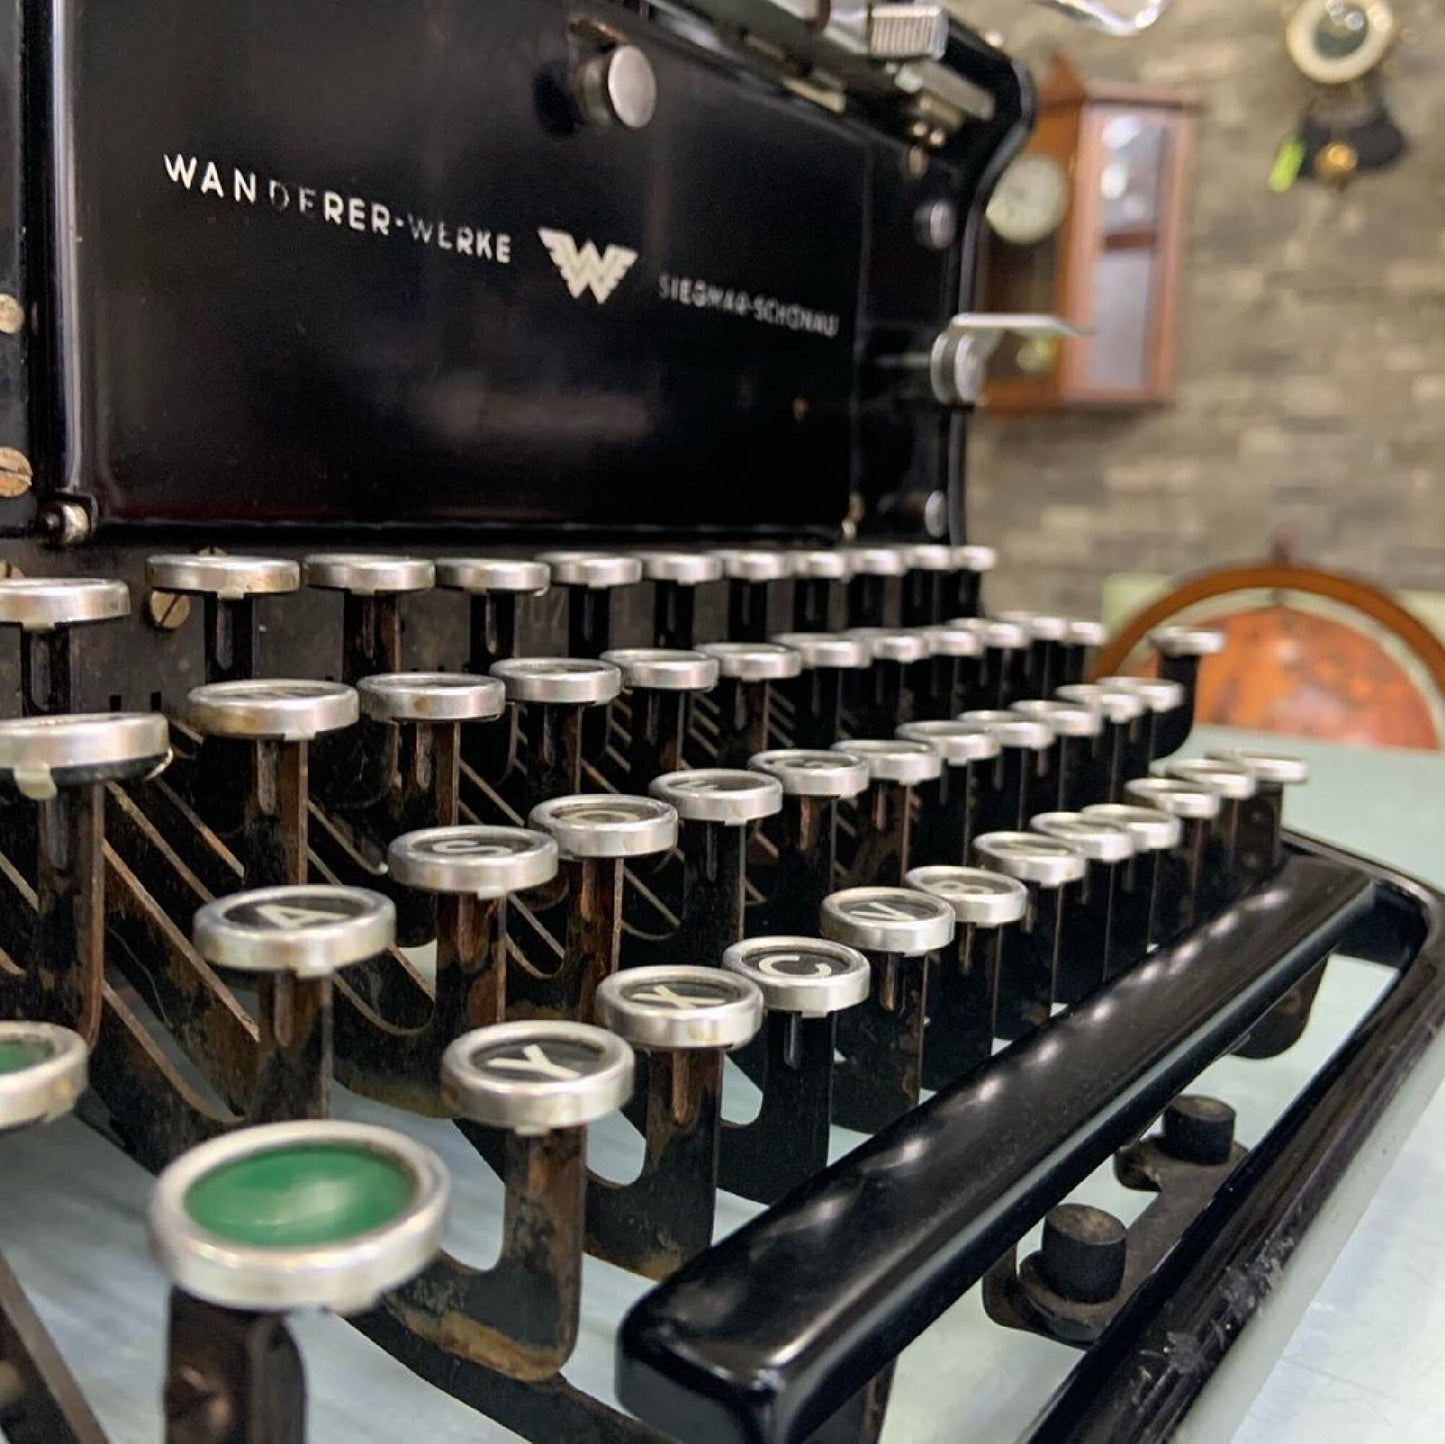 Continental Typewriter - A Working Marvel, an Exquisite Premium Gift